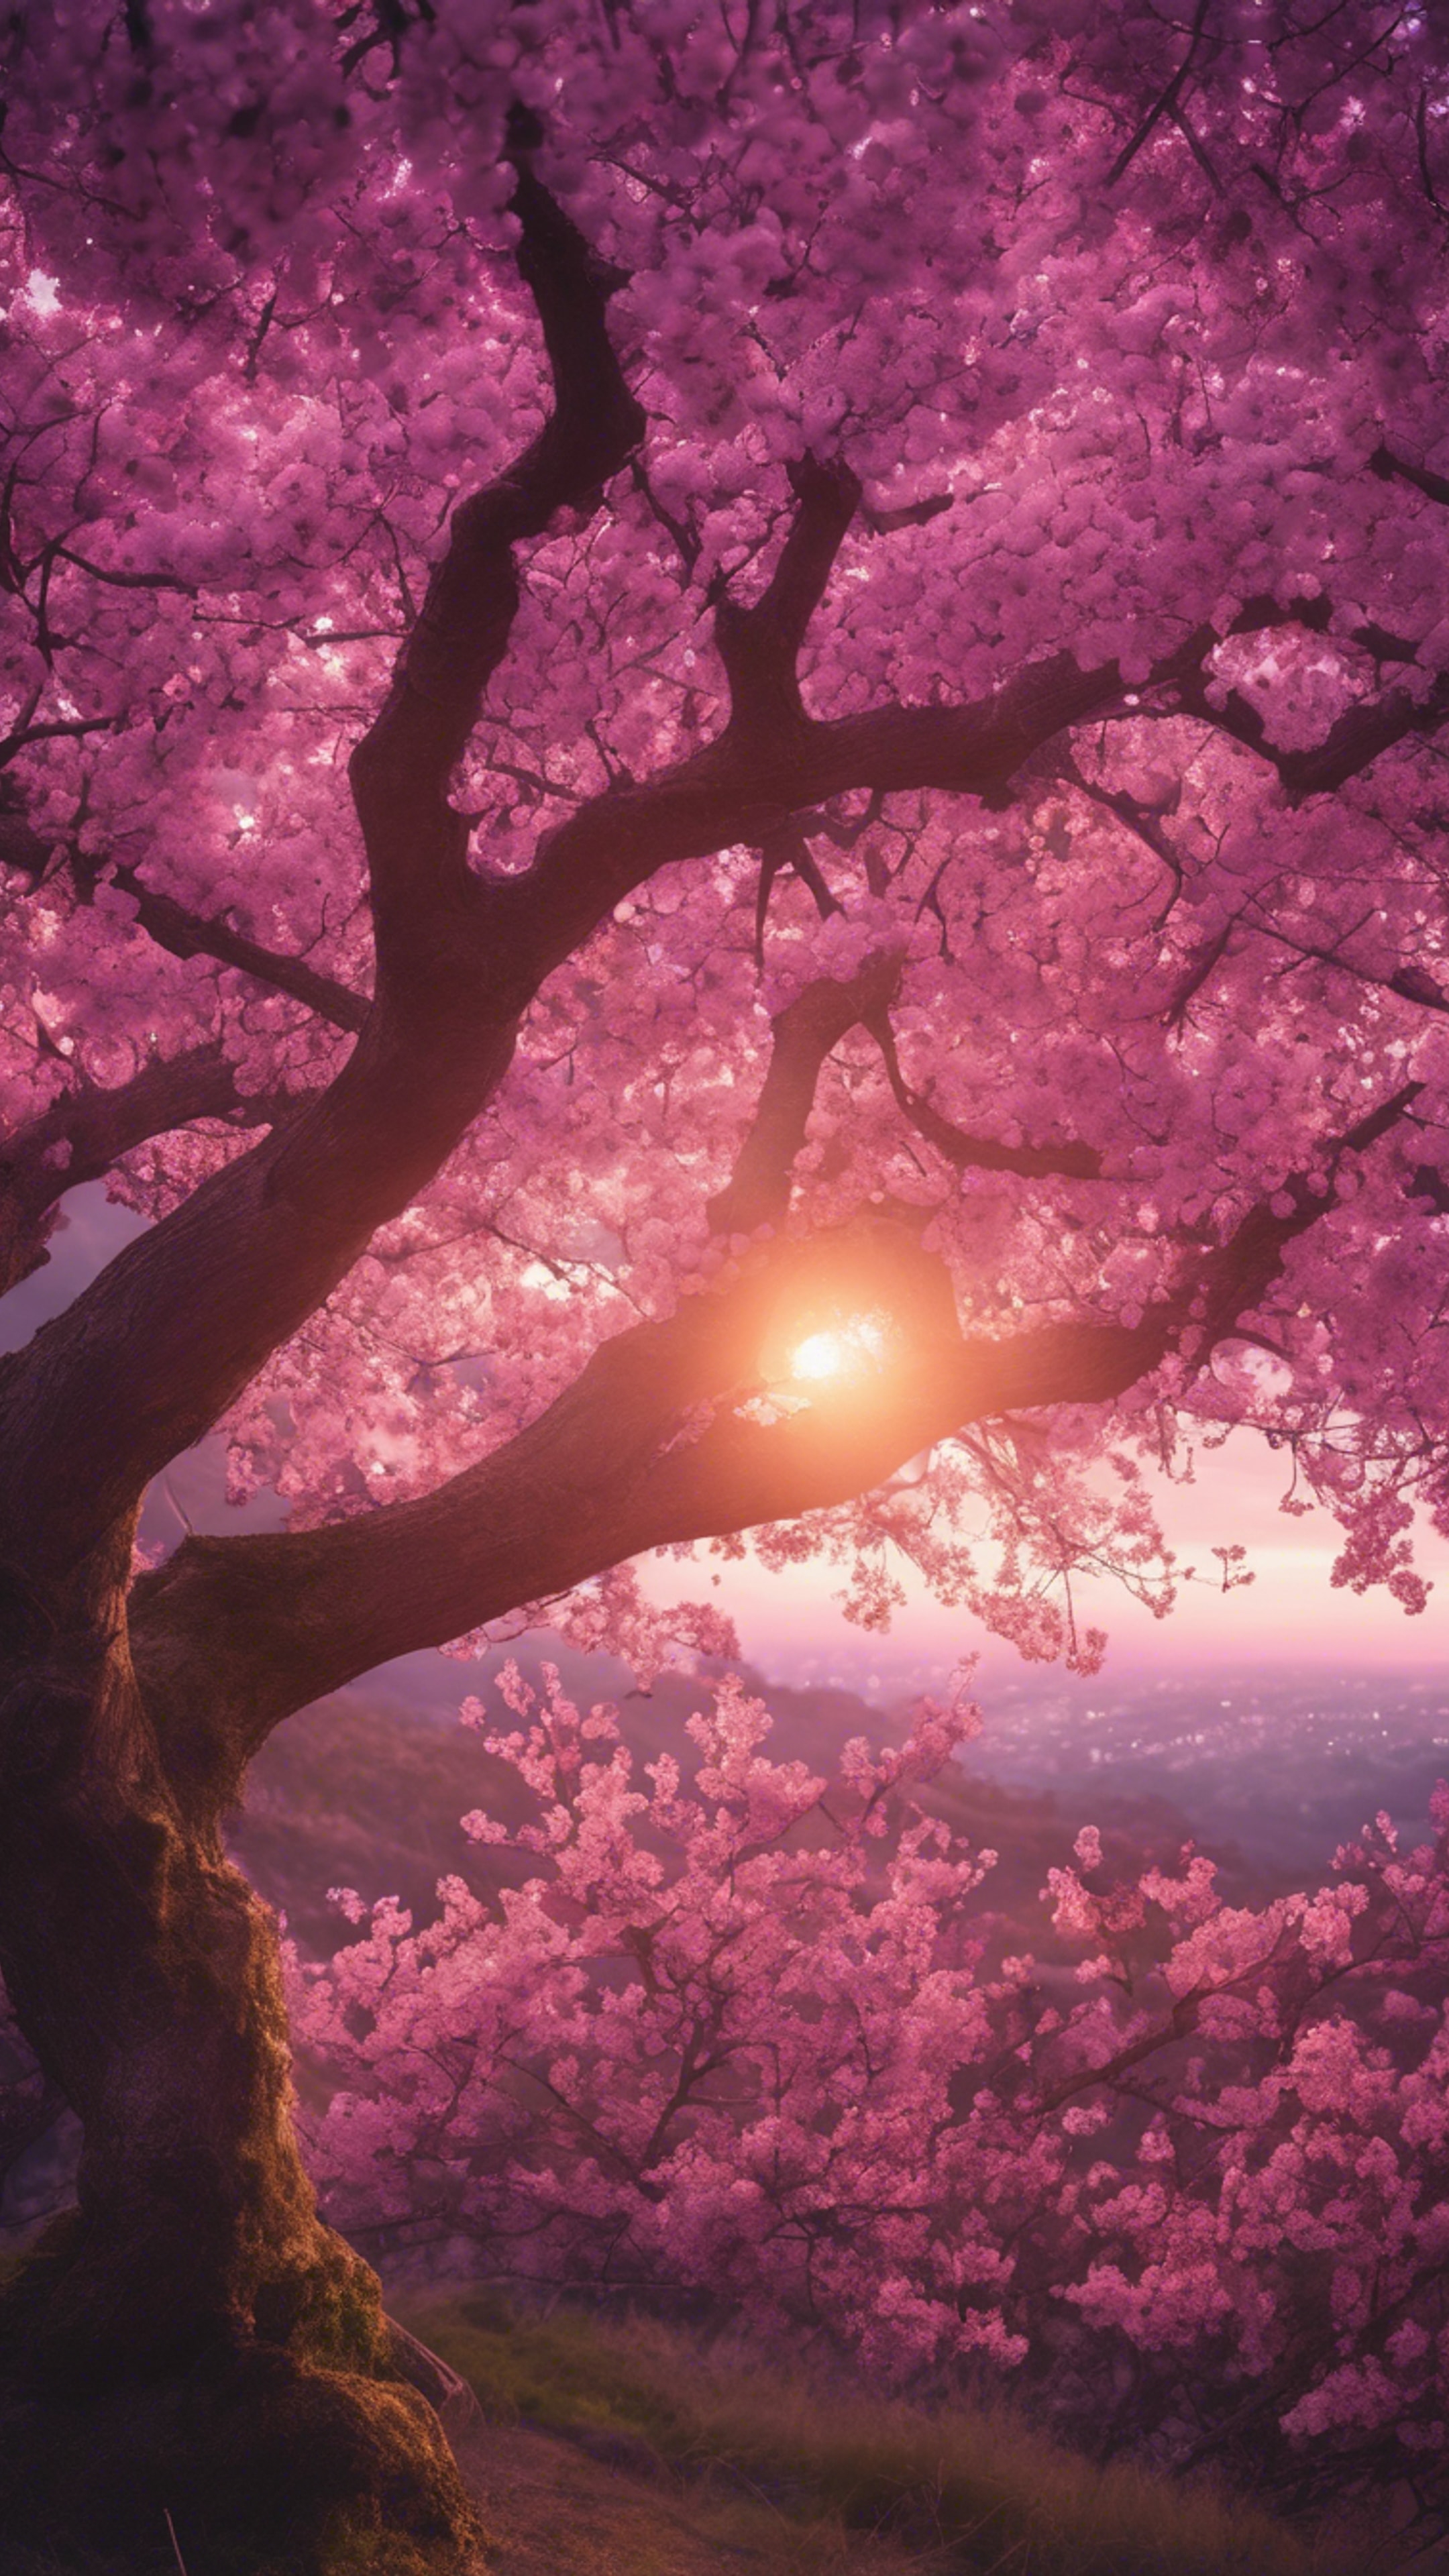 A lush pink blossom tree under a stunning purple sunset. Wallpaper[10c3e04eed844ab2b676]